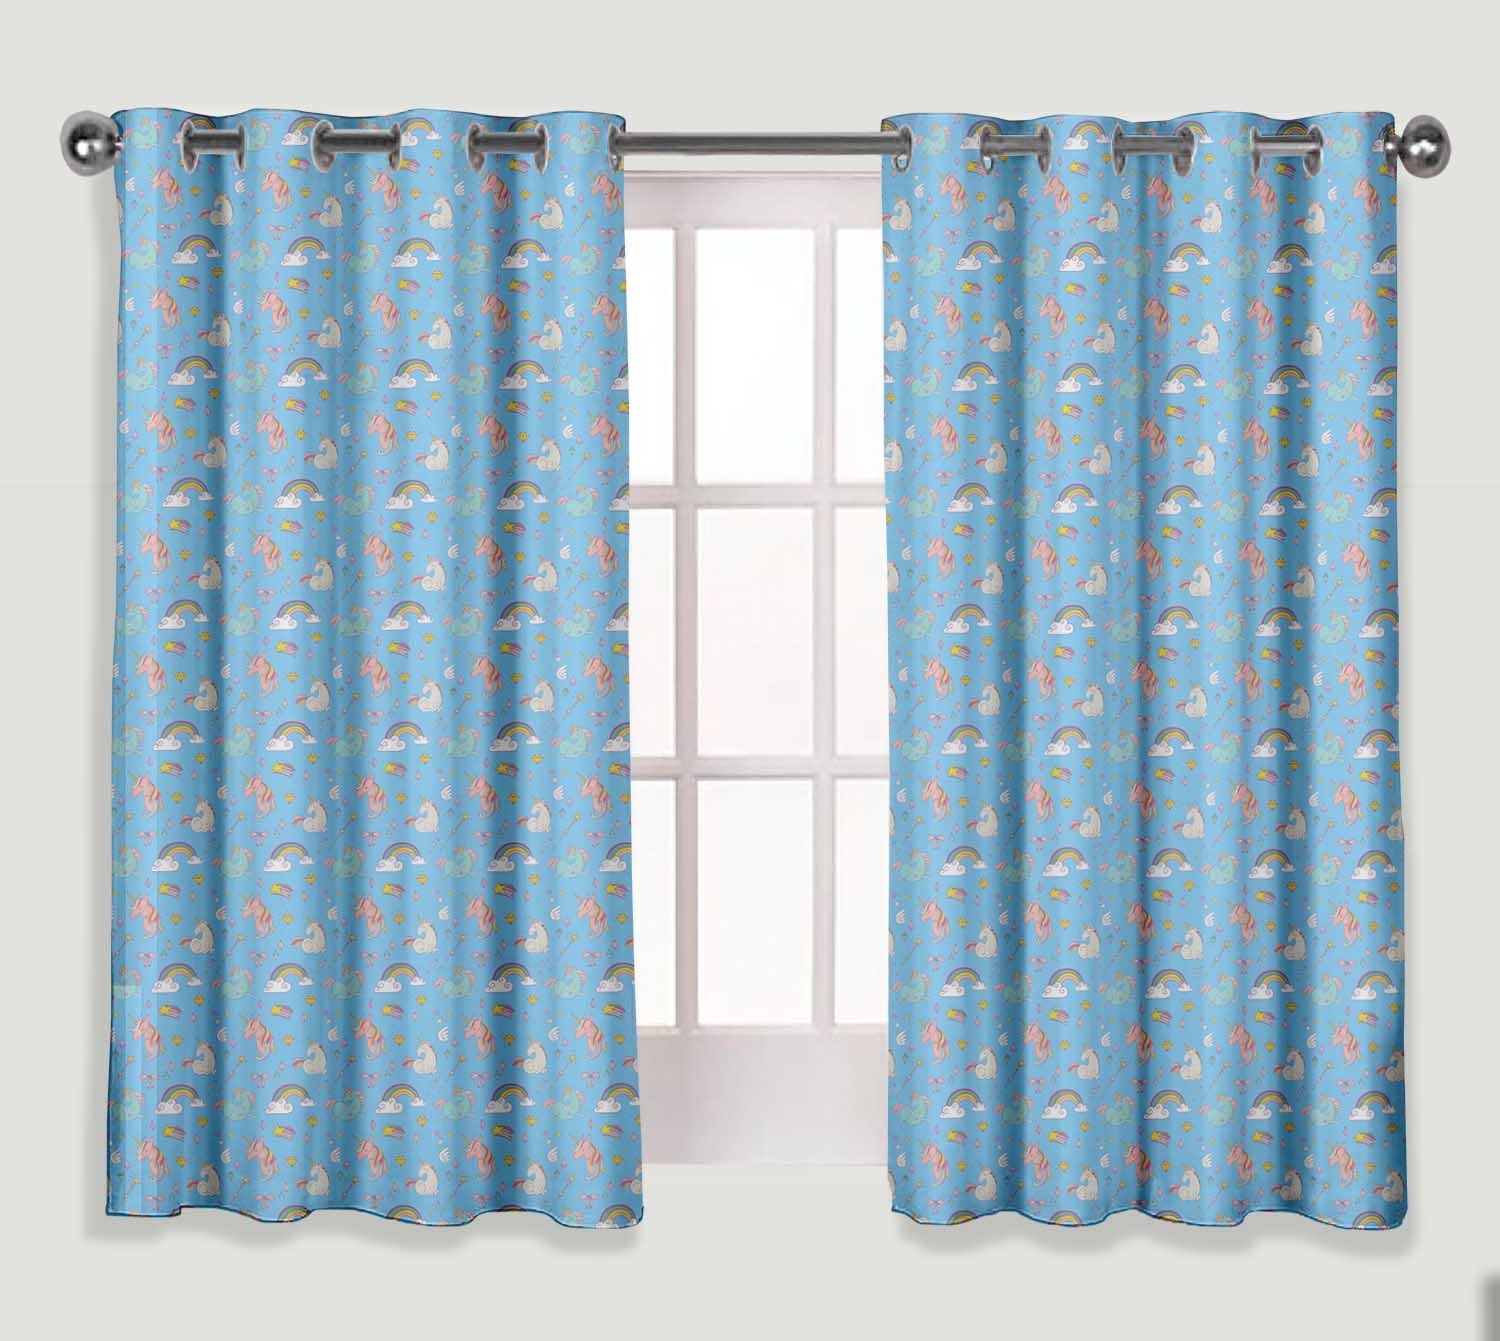 KD-547A S4sassy Kids Unicorn Rainbow Home Decorative Curtain Eyelet Panel 